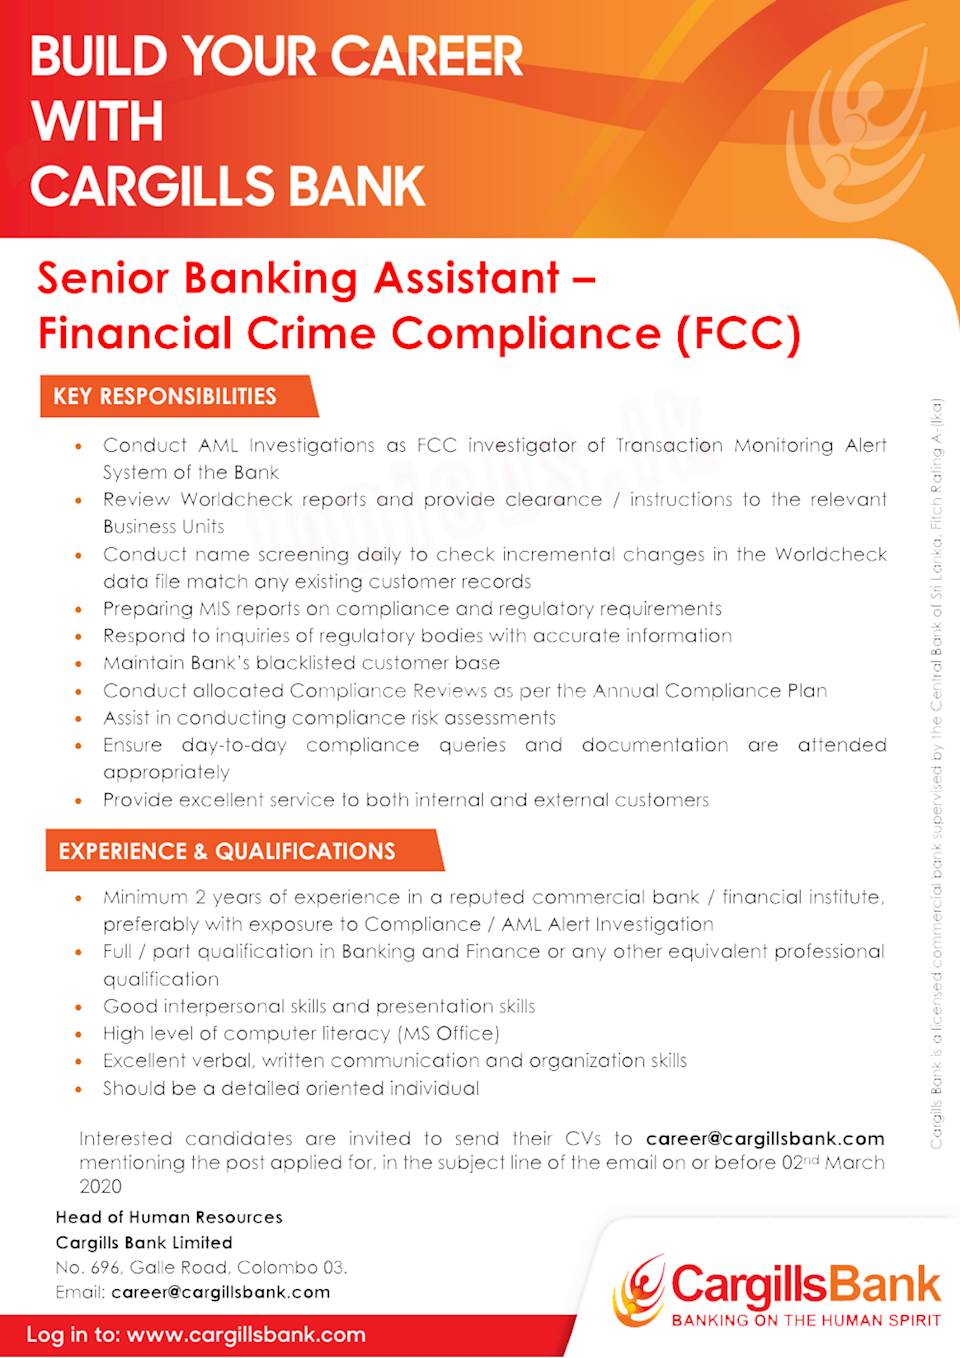 Senior Banking Assistant - Financial Crime Compliance (FCC)